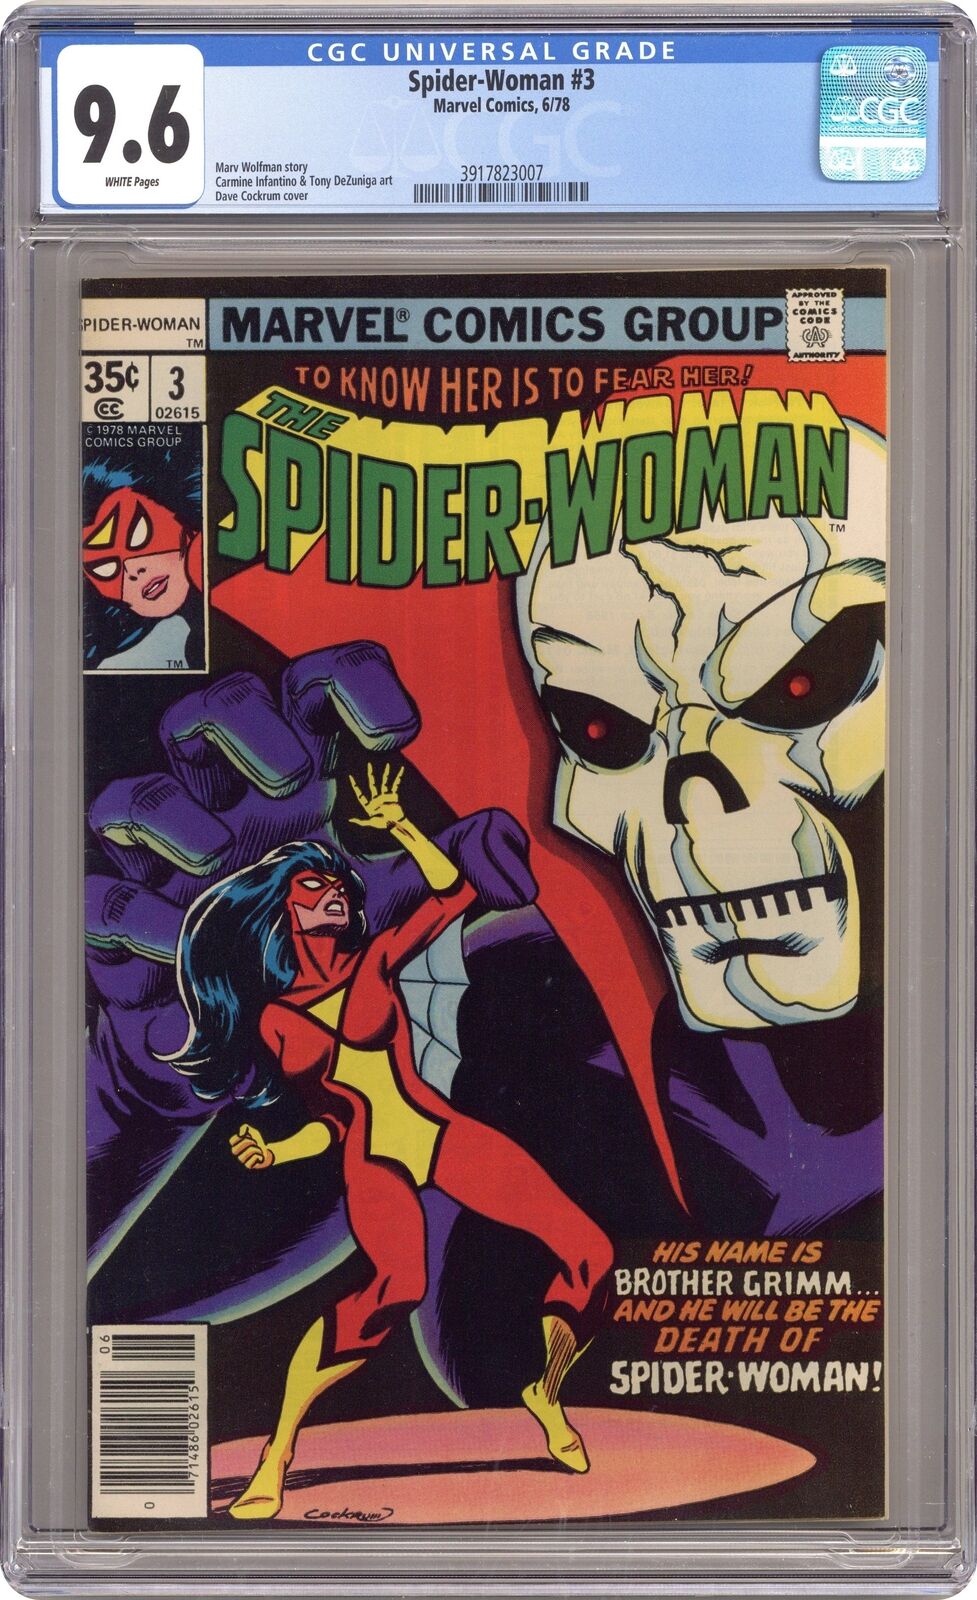 Spider-Woman #3 CGC 9.6 1978 3917823007